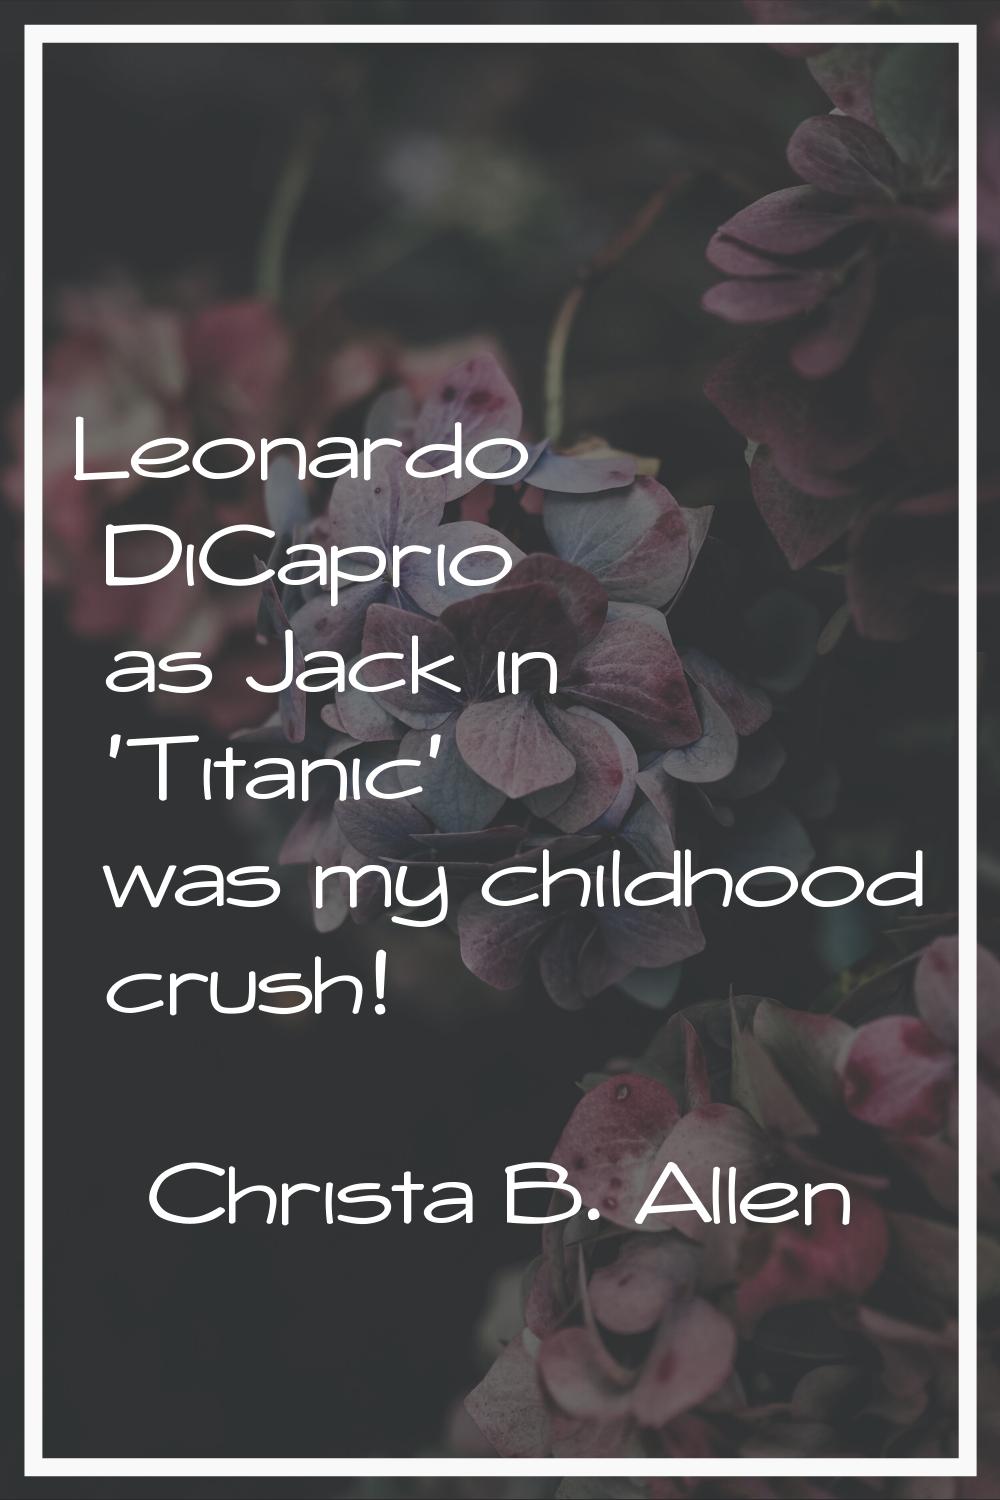 Leonardo DiCaprio as Jack in 'Titanic' was my childhood crush!